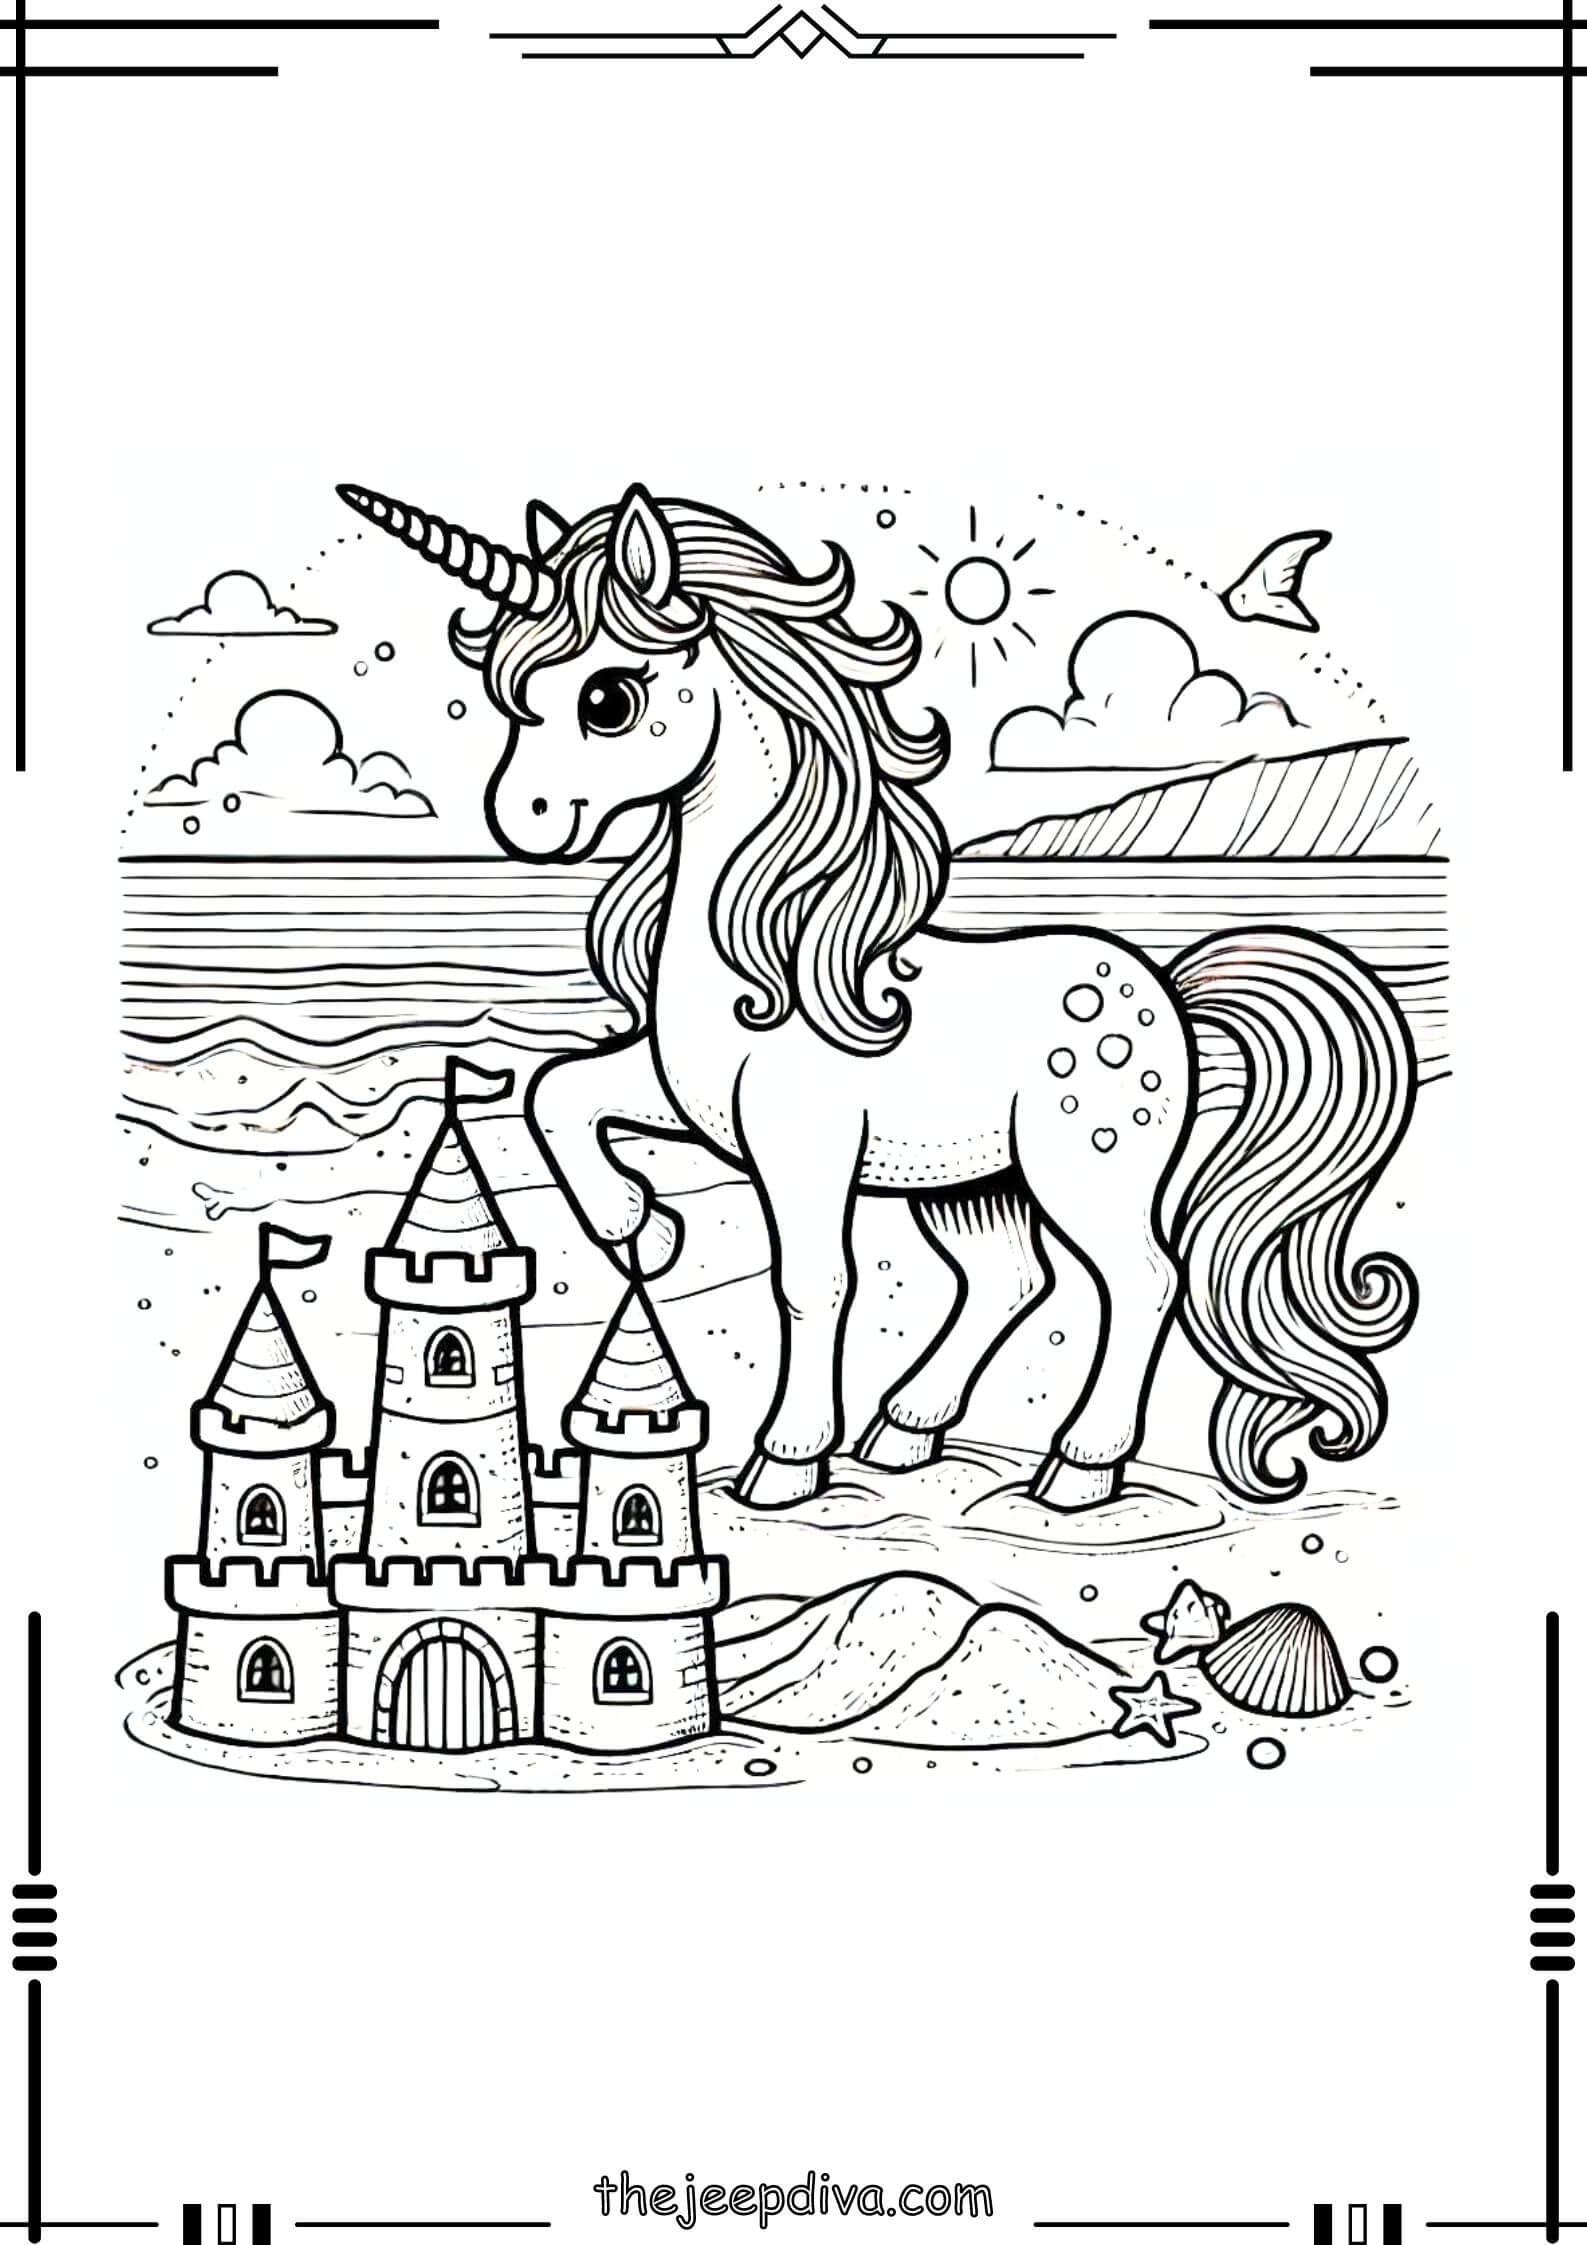 unicorn-coloring-page-hard-3